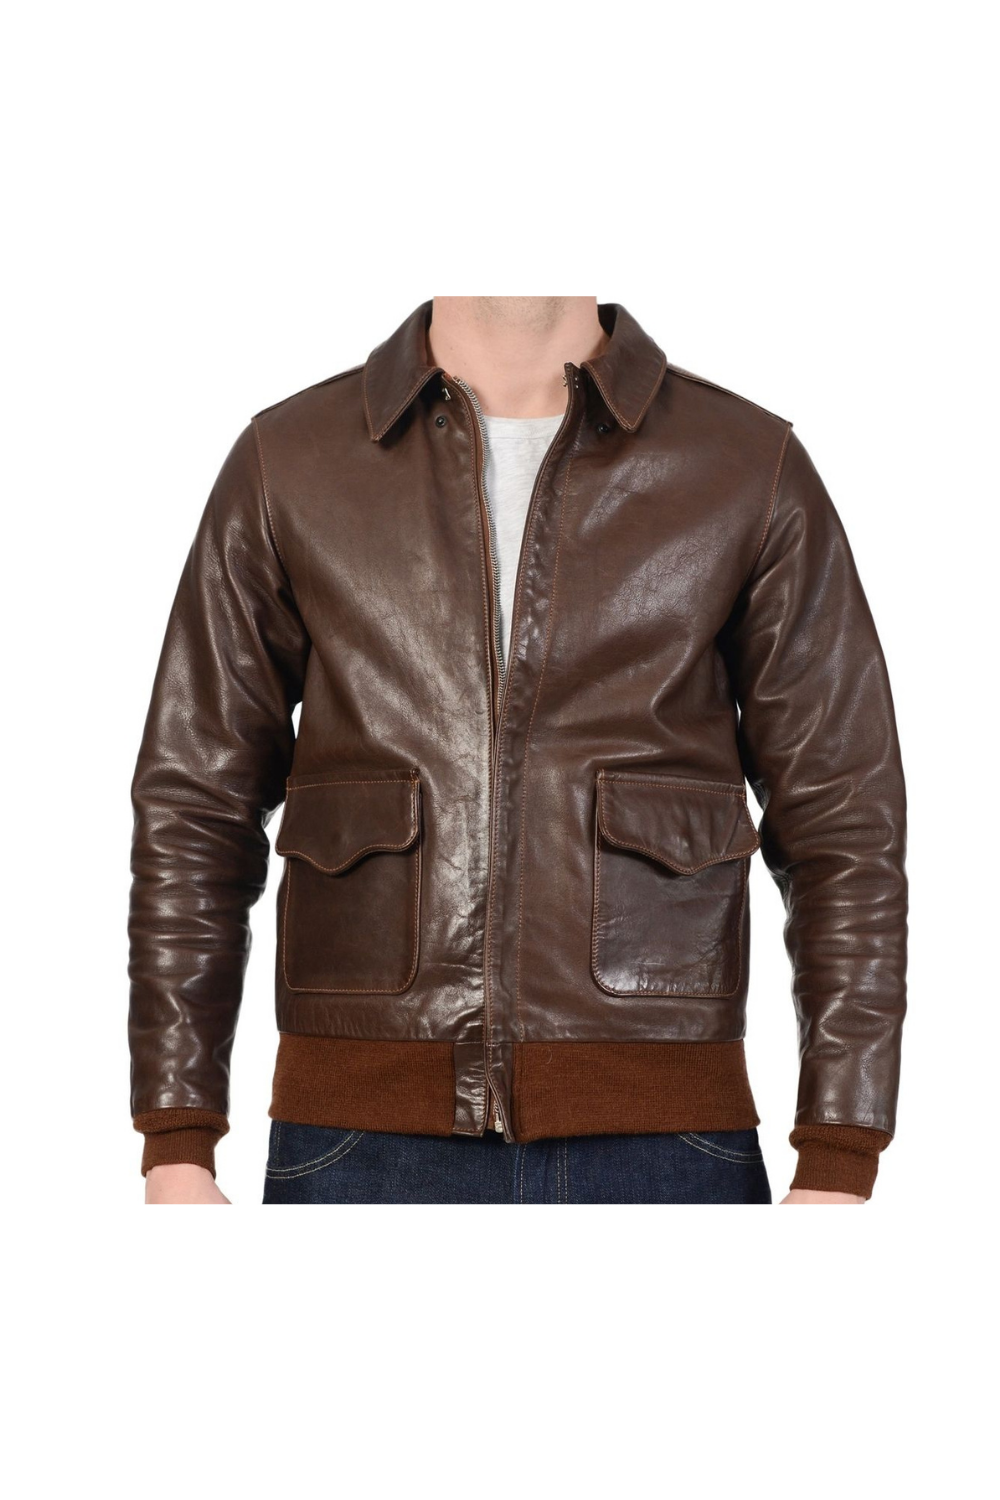 A2 Bomber Brown Leather Jacket - Biker Jacket | Throblife